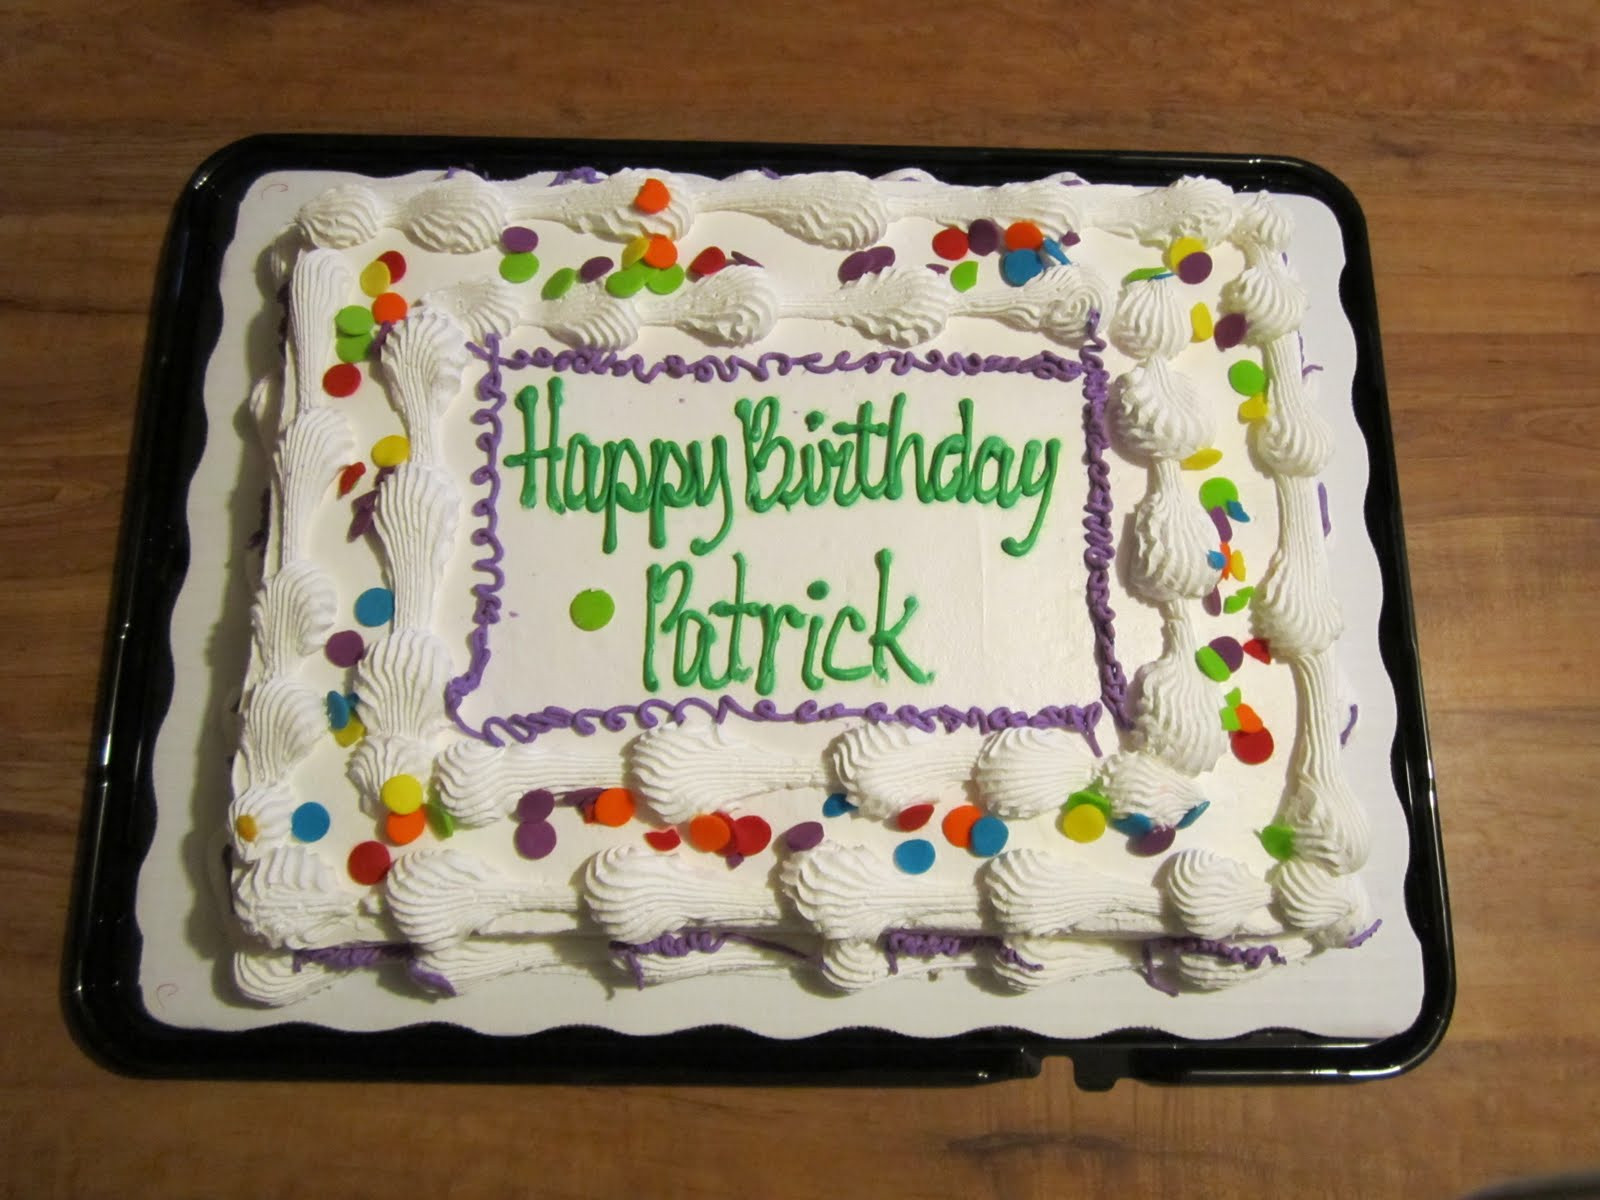 Happy Birthday Patrick Cake
 Be Thou Exalted Happy Birthday Patrick